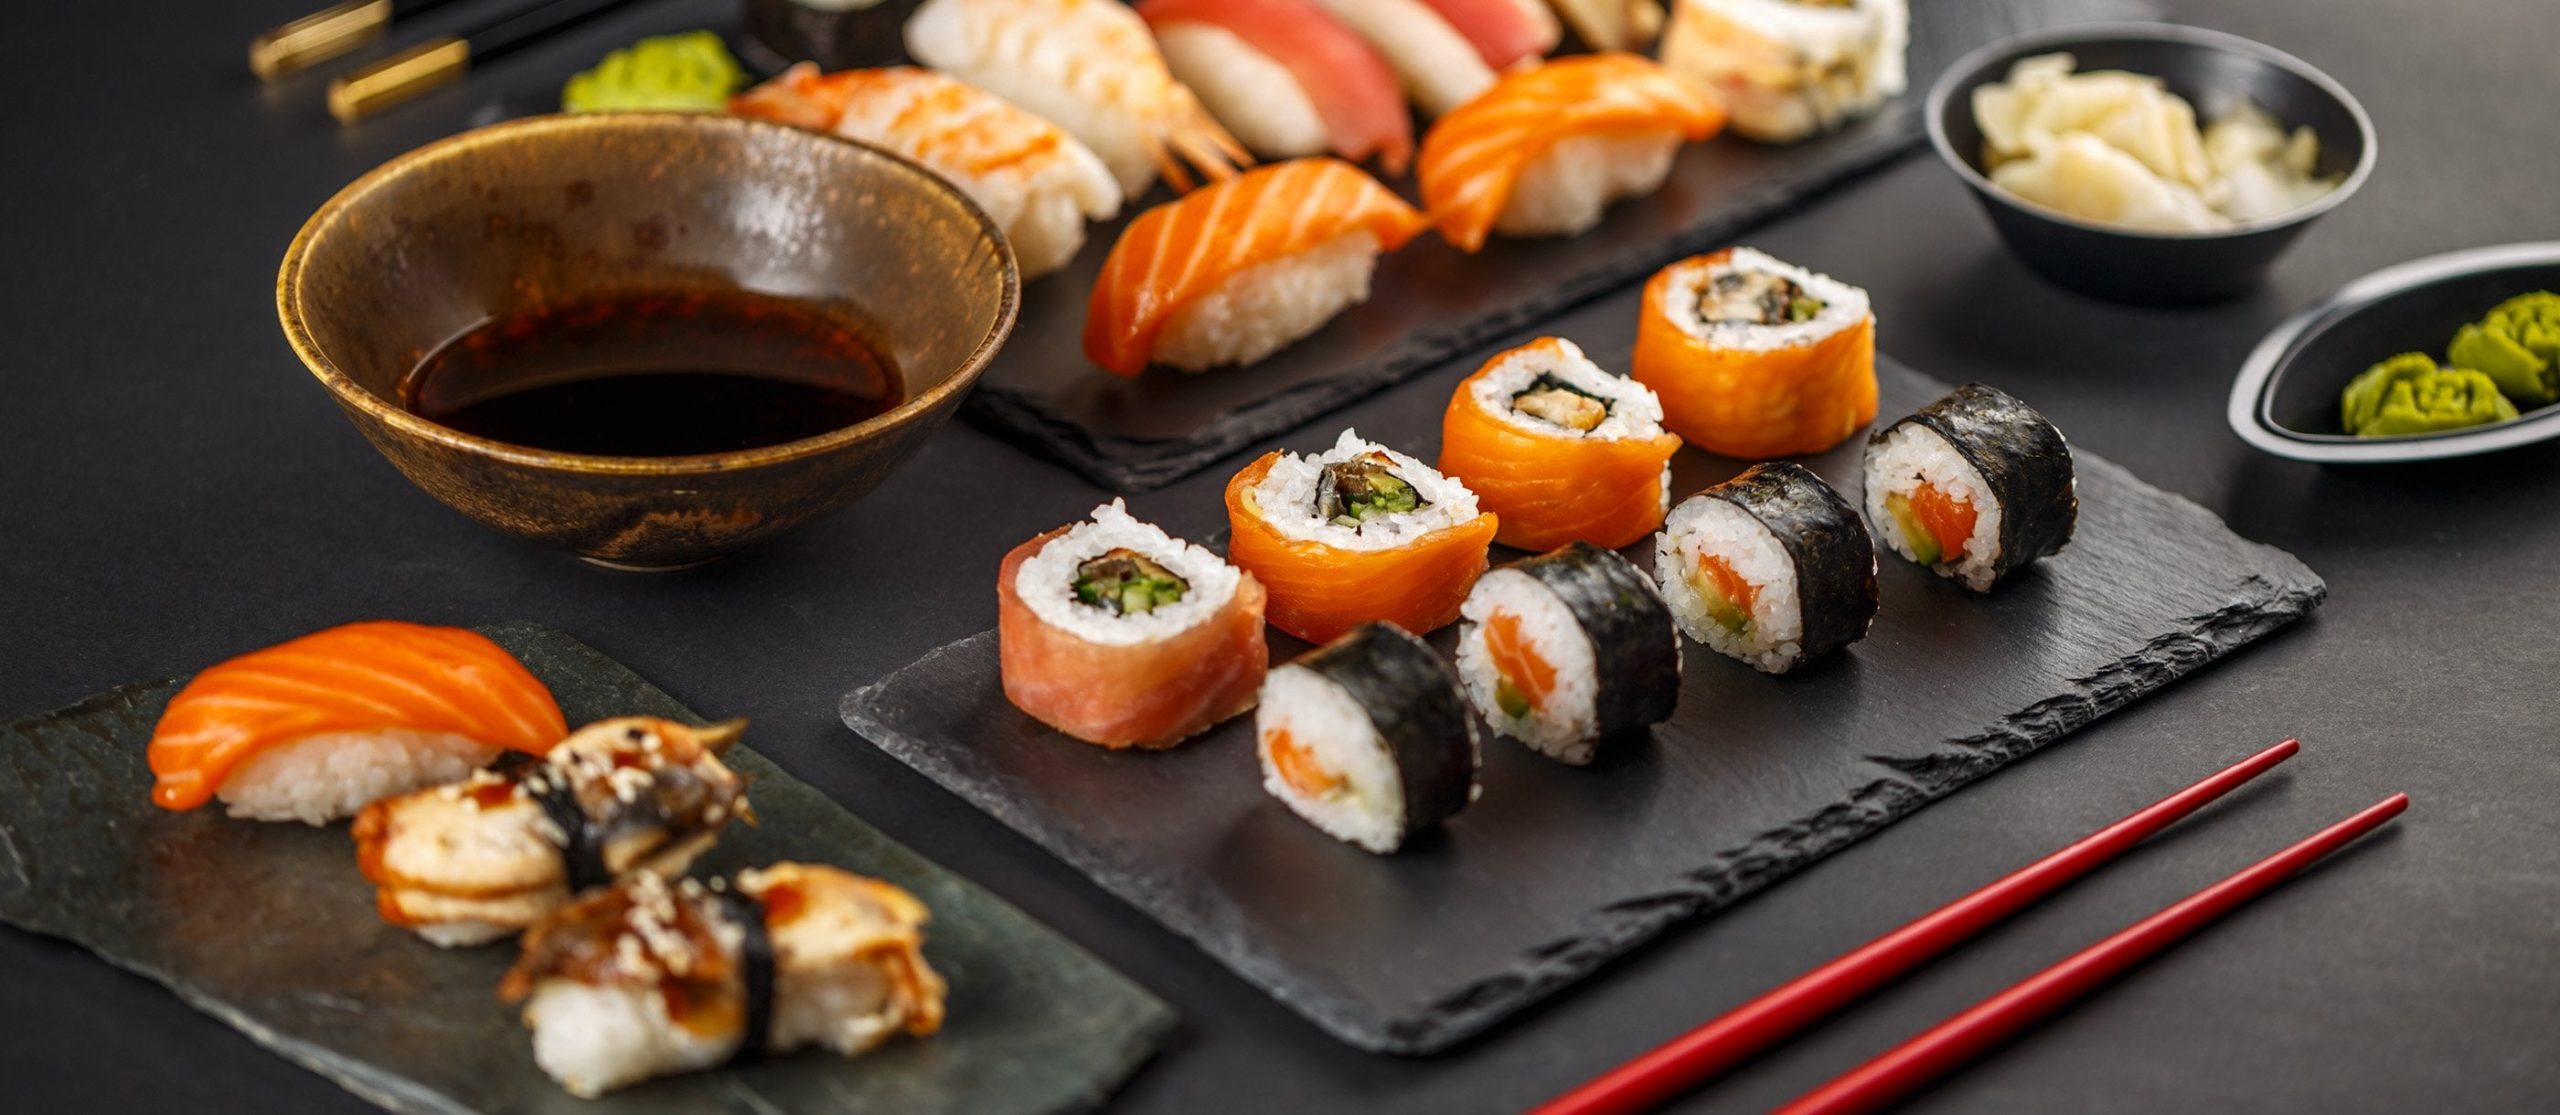 100 Most Popular Japanese Foods - TasteAtlas - Alo Japan